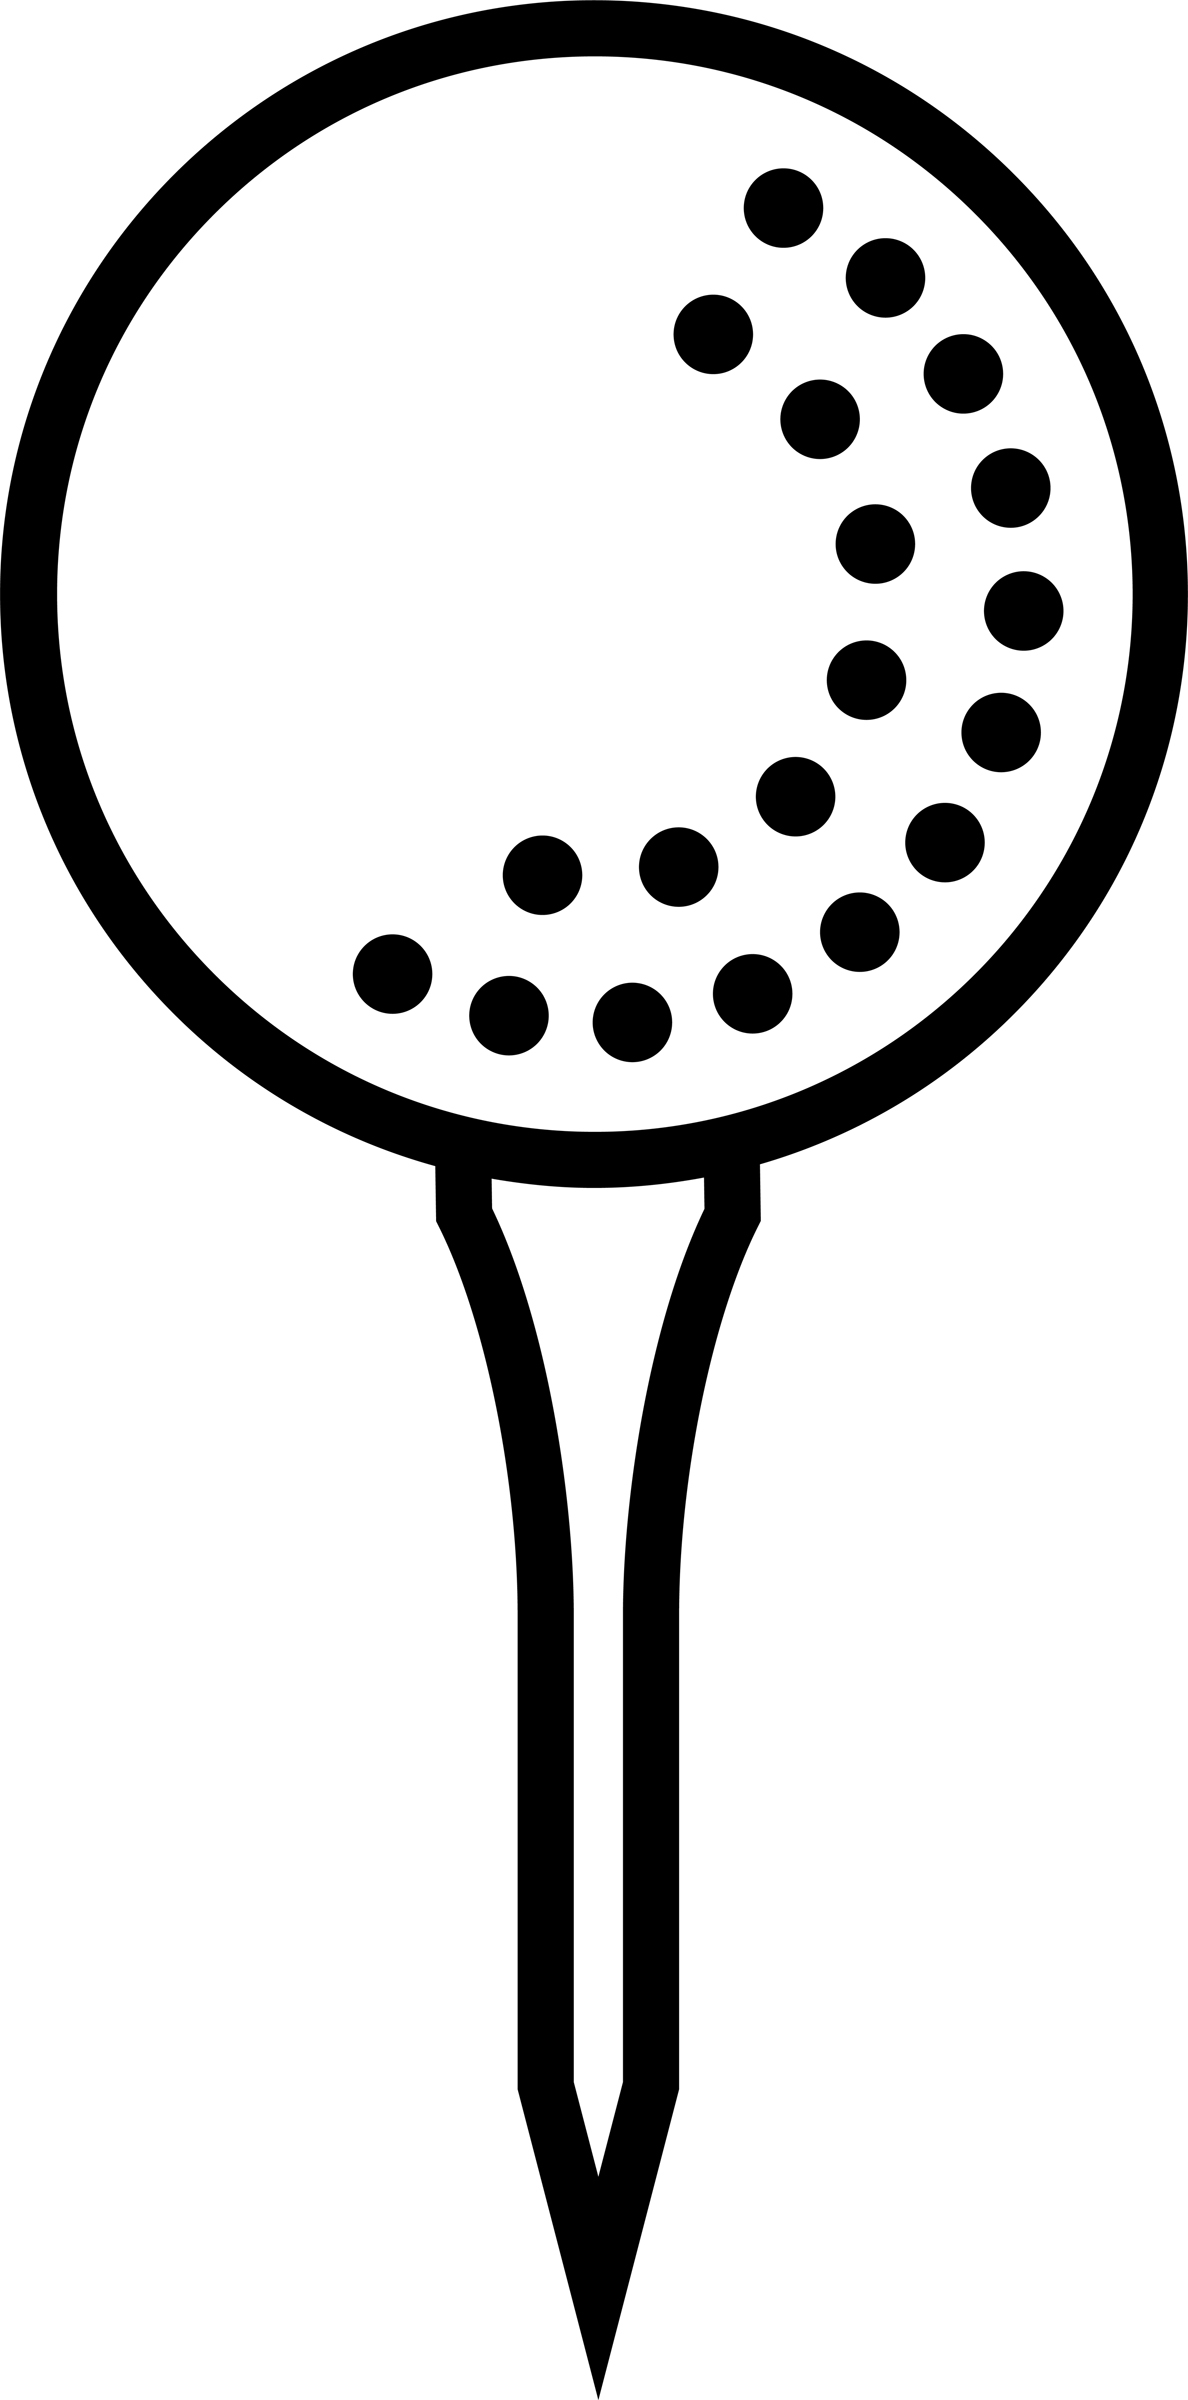 golf ball clip art free vector - photo #21